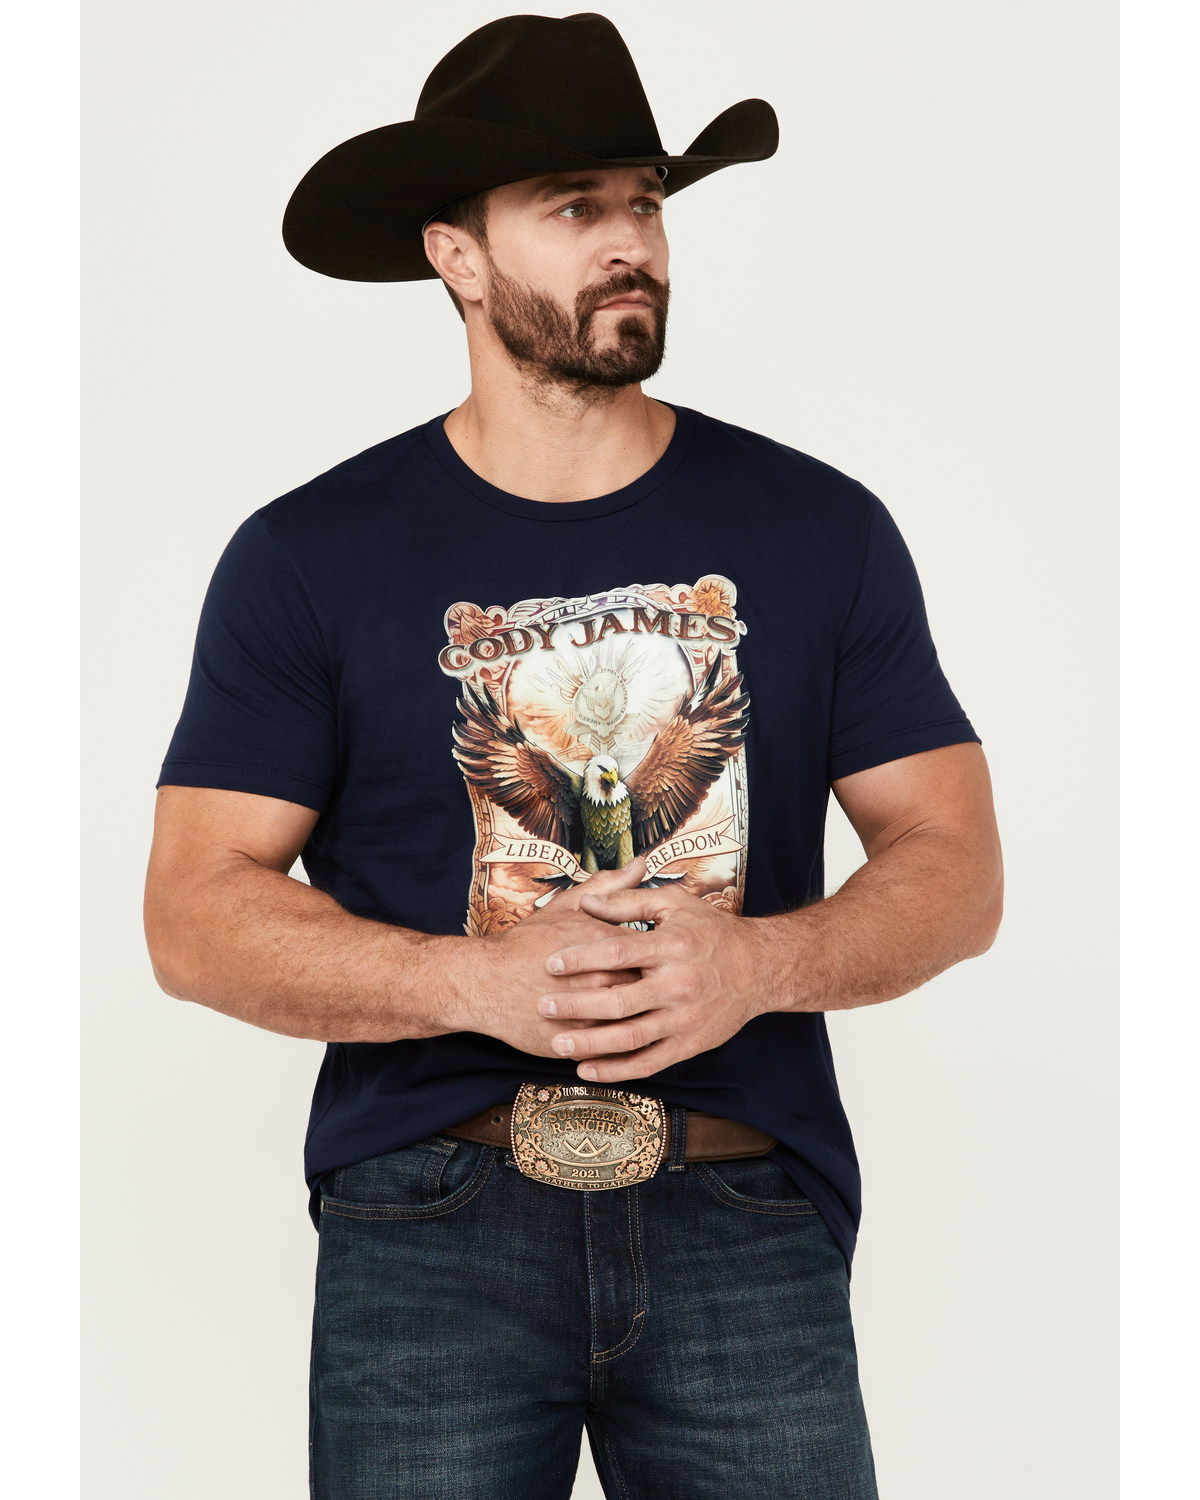 Cody James Men's Liberty Death Short Sleeve Graphic T-Shirt